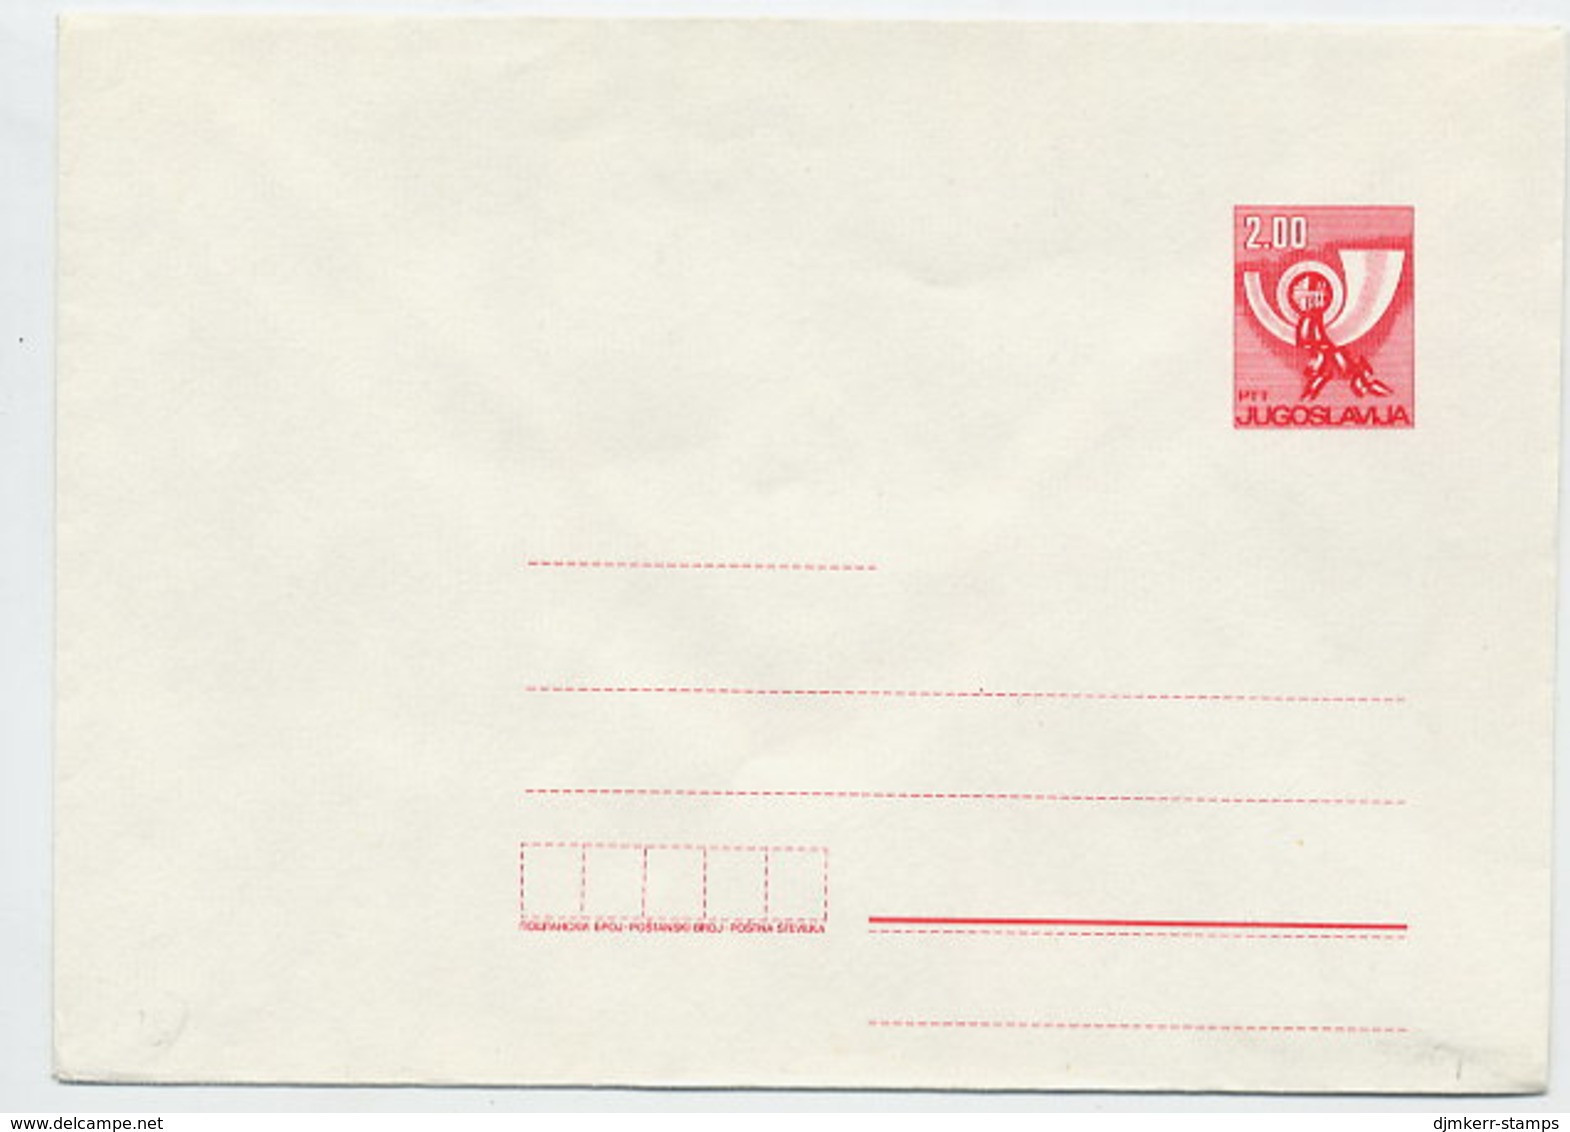 YUGOSLAVIA 1978 Posthorn 2.00 D. Envelope, Unused. Michel U71 - Ganzsachen